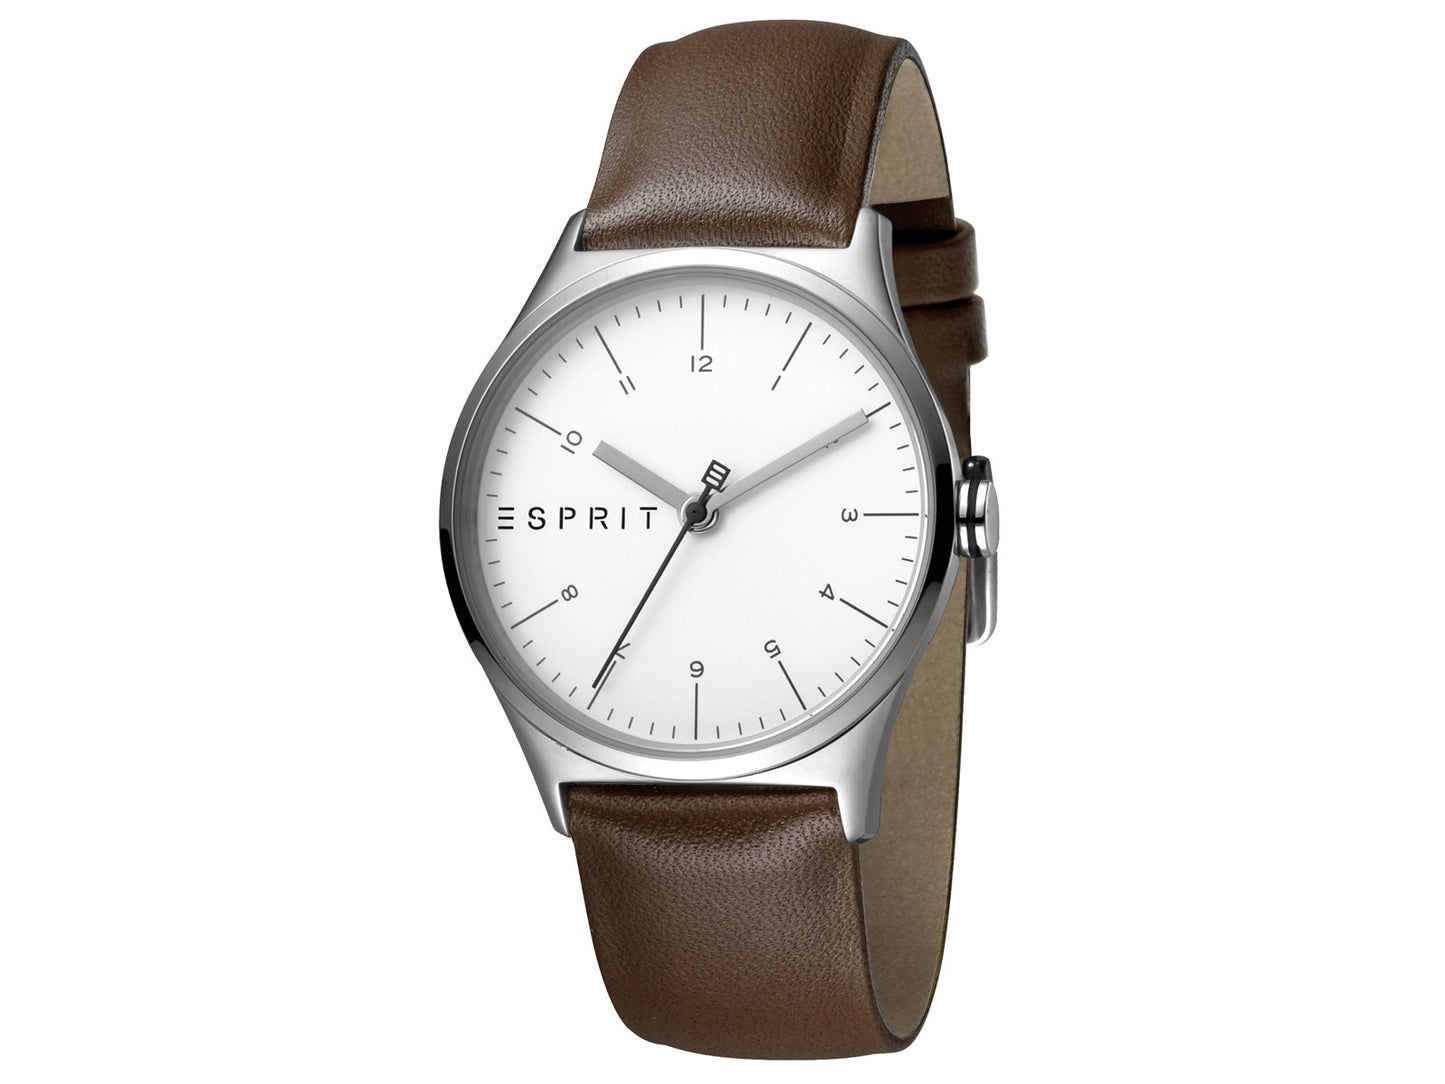 Esprit Brown Calf Leather Watch